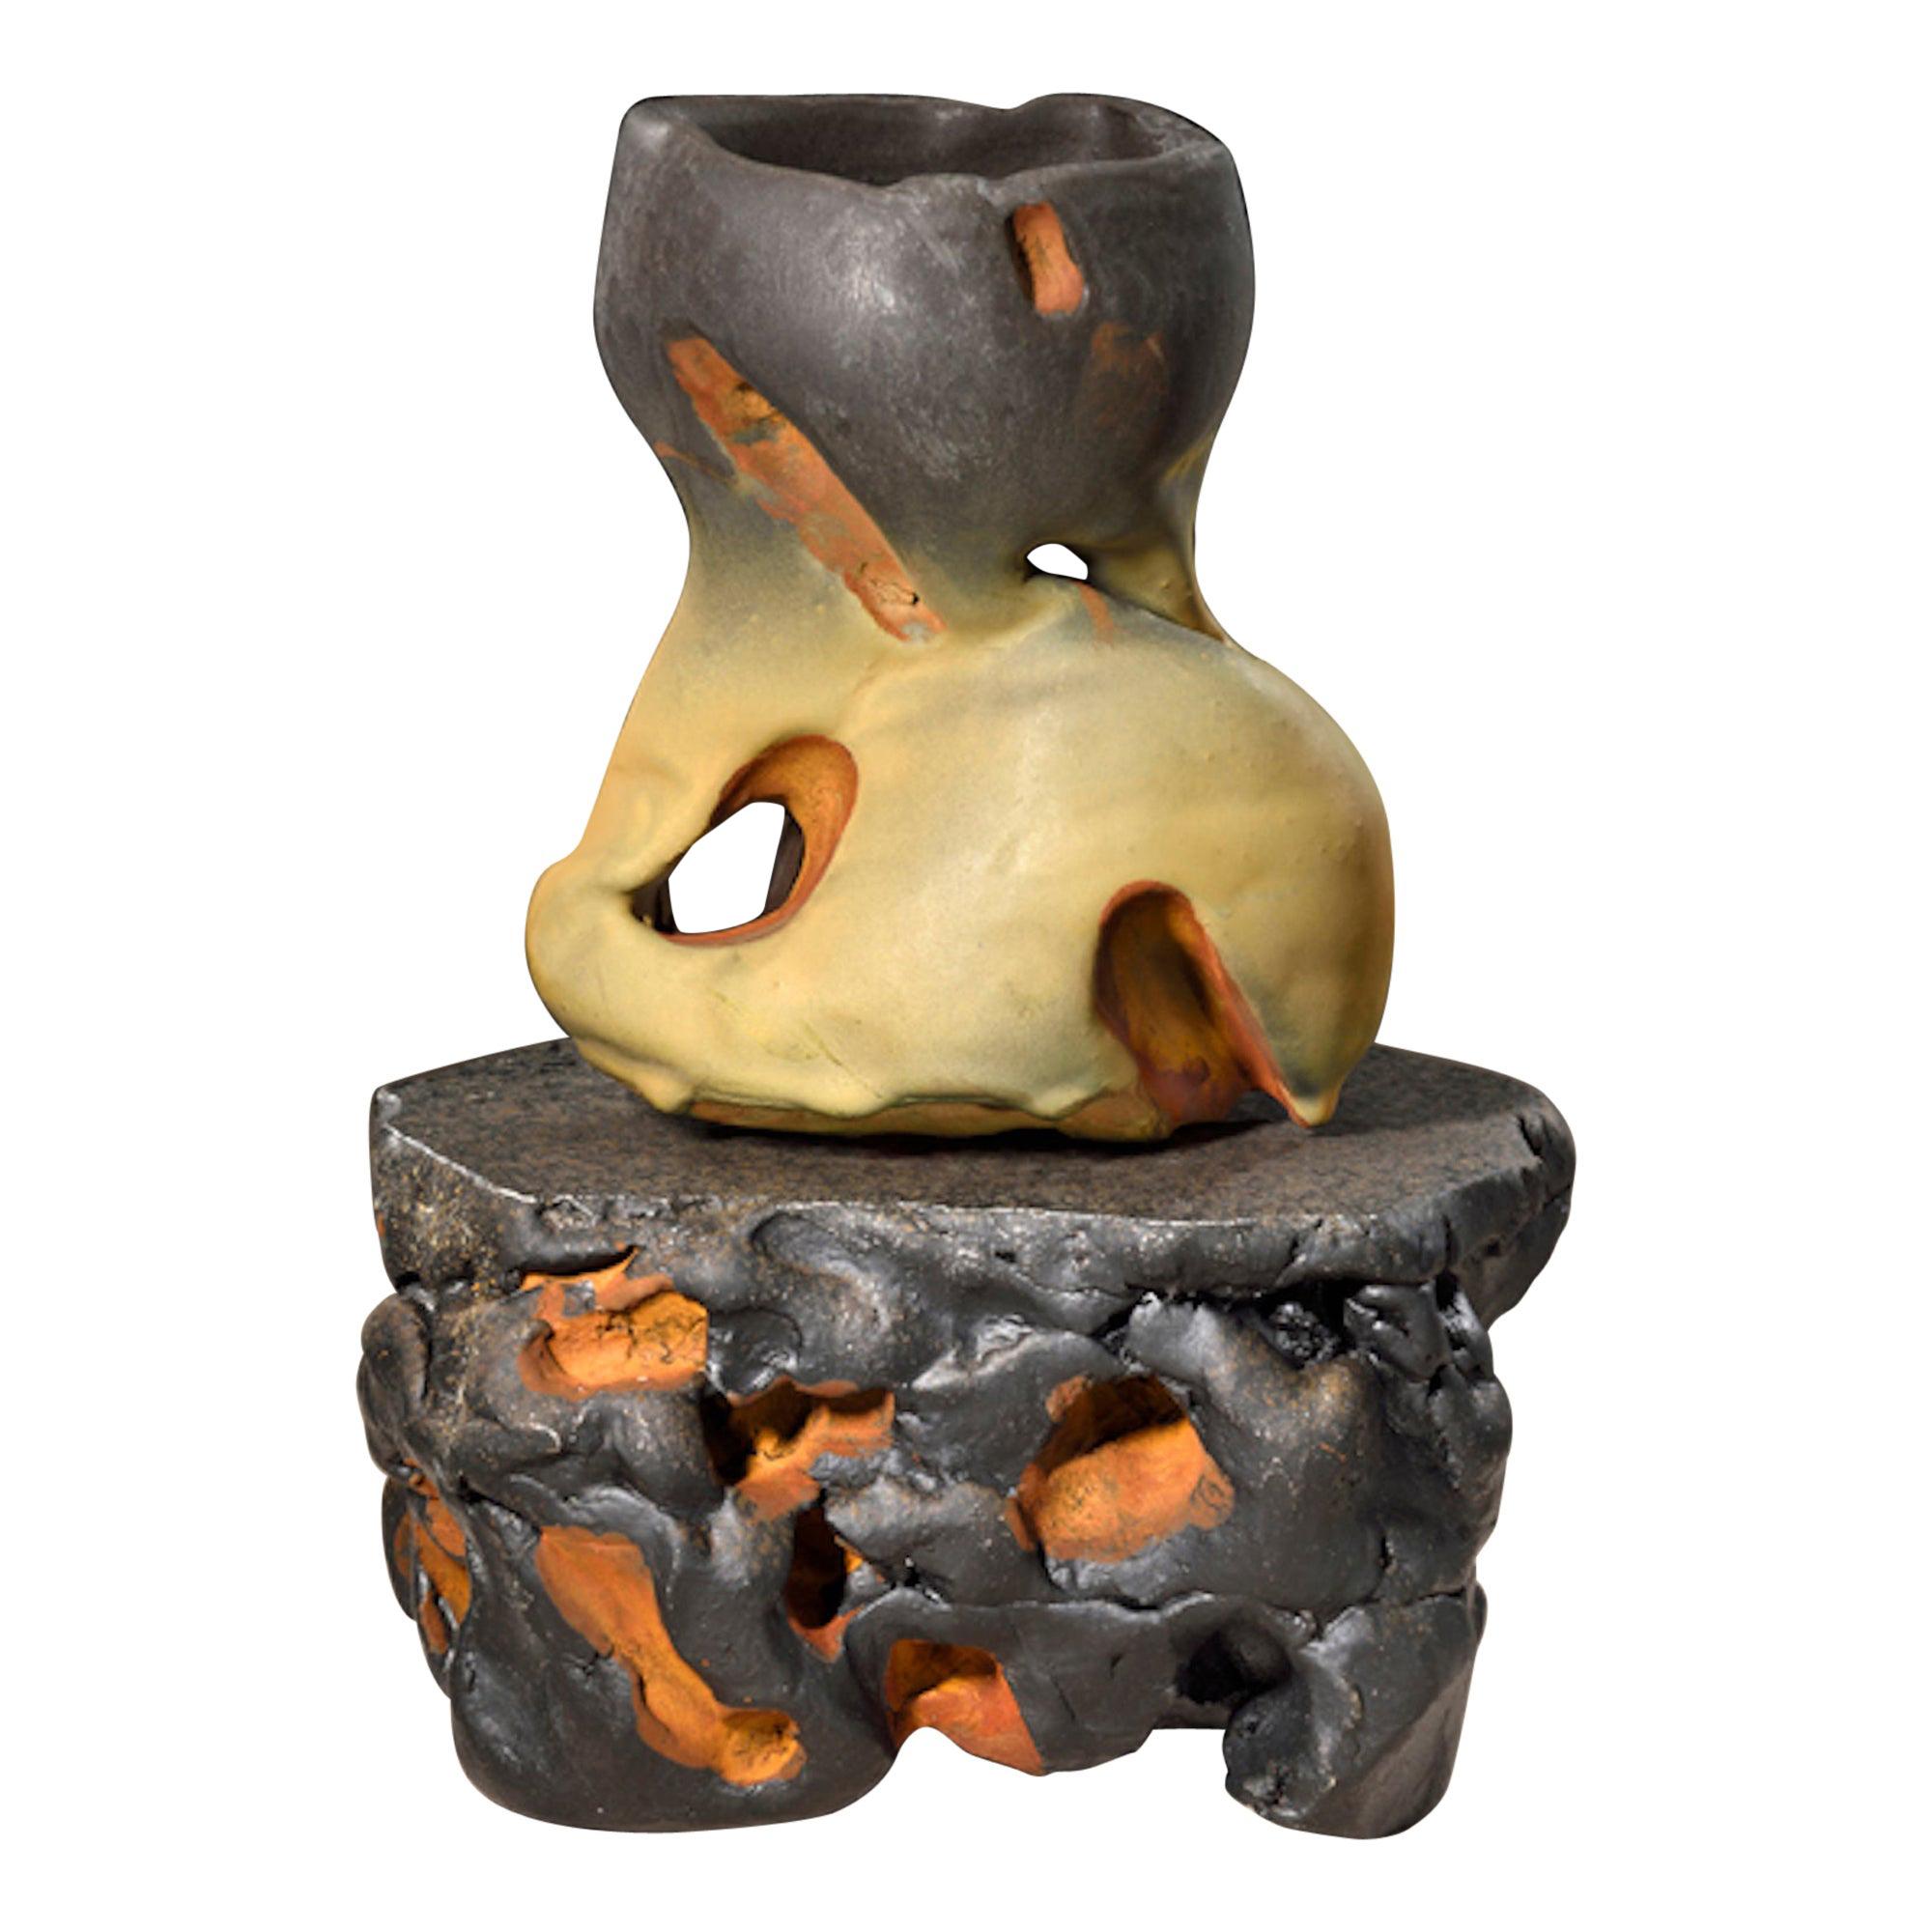 Richard Hirsch Ceramic Scholar Rock Cup Sculpture #46, 2018 For Sale